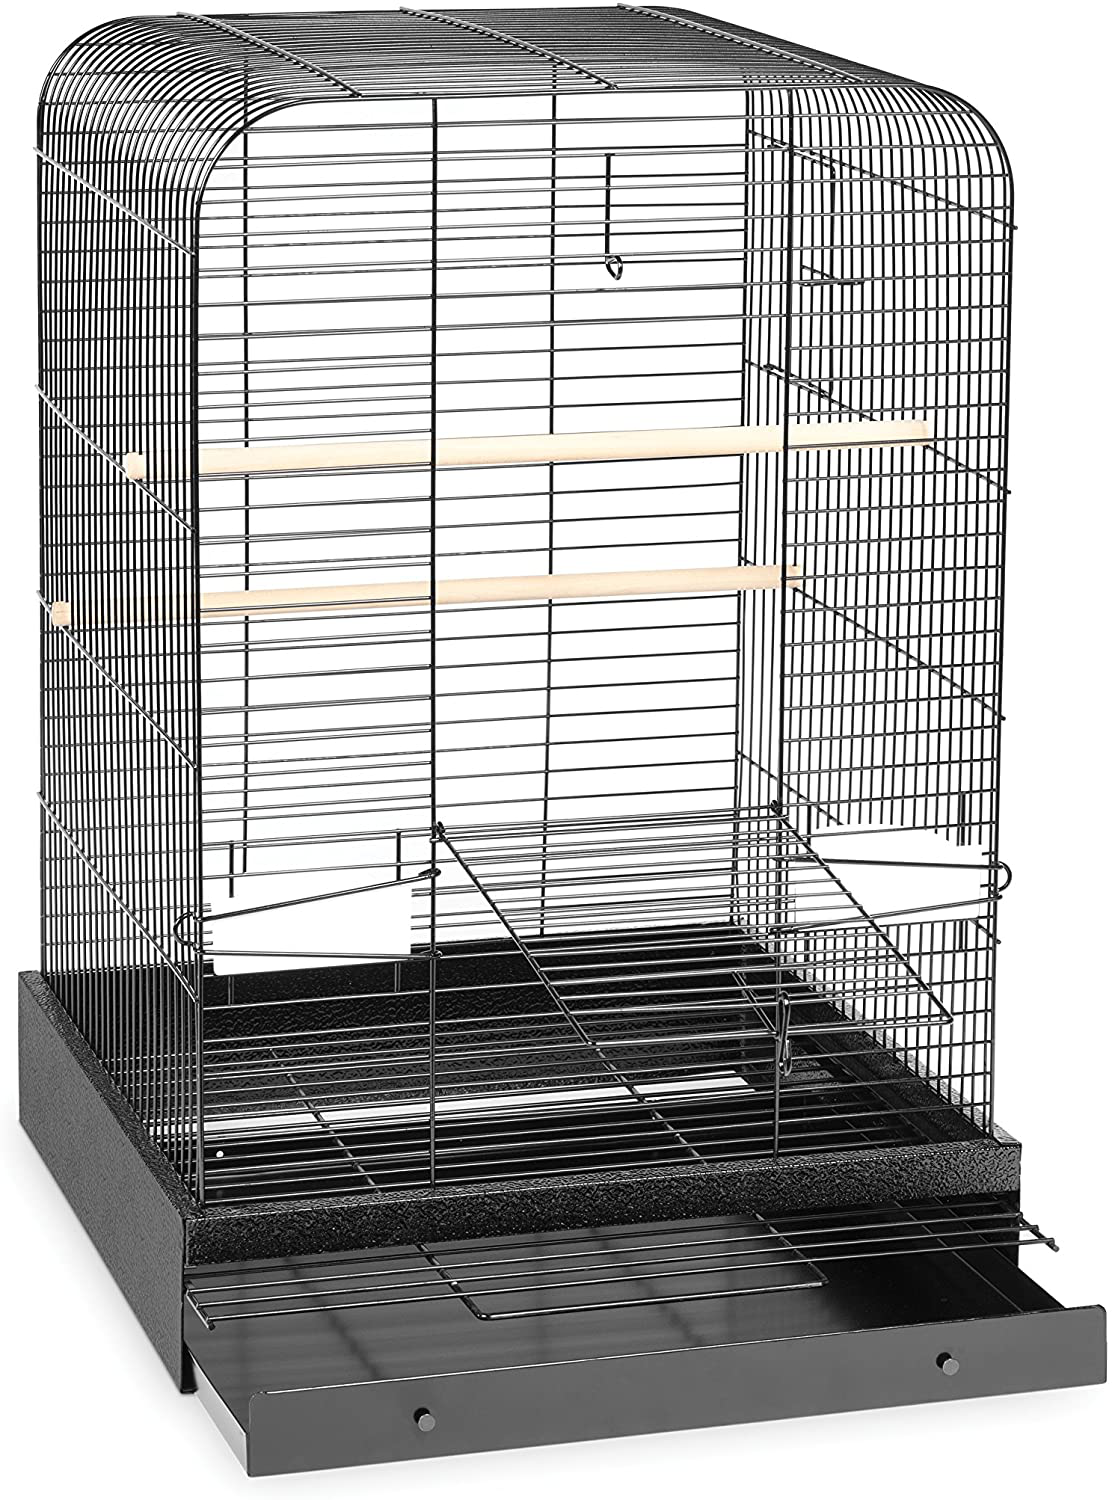 Prevue Hendryx 124BLK Pet Products Madison Bird Cage, Hammertone Black